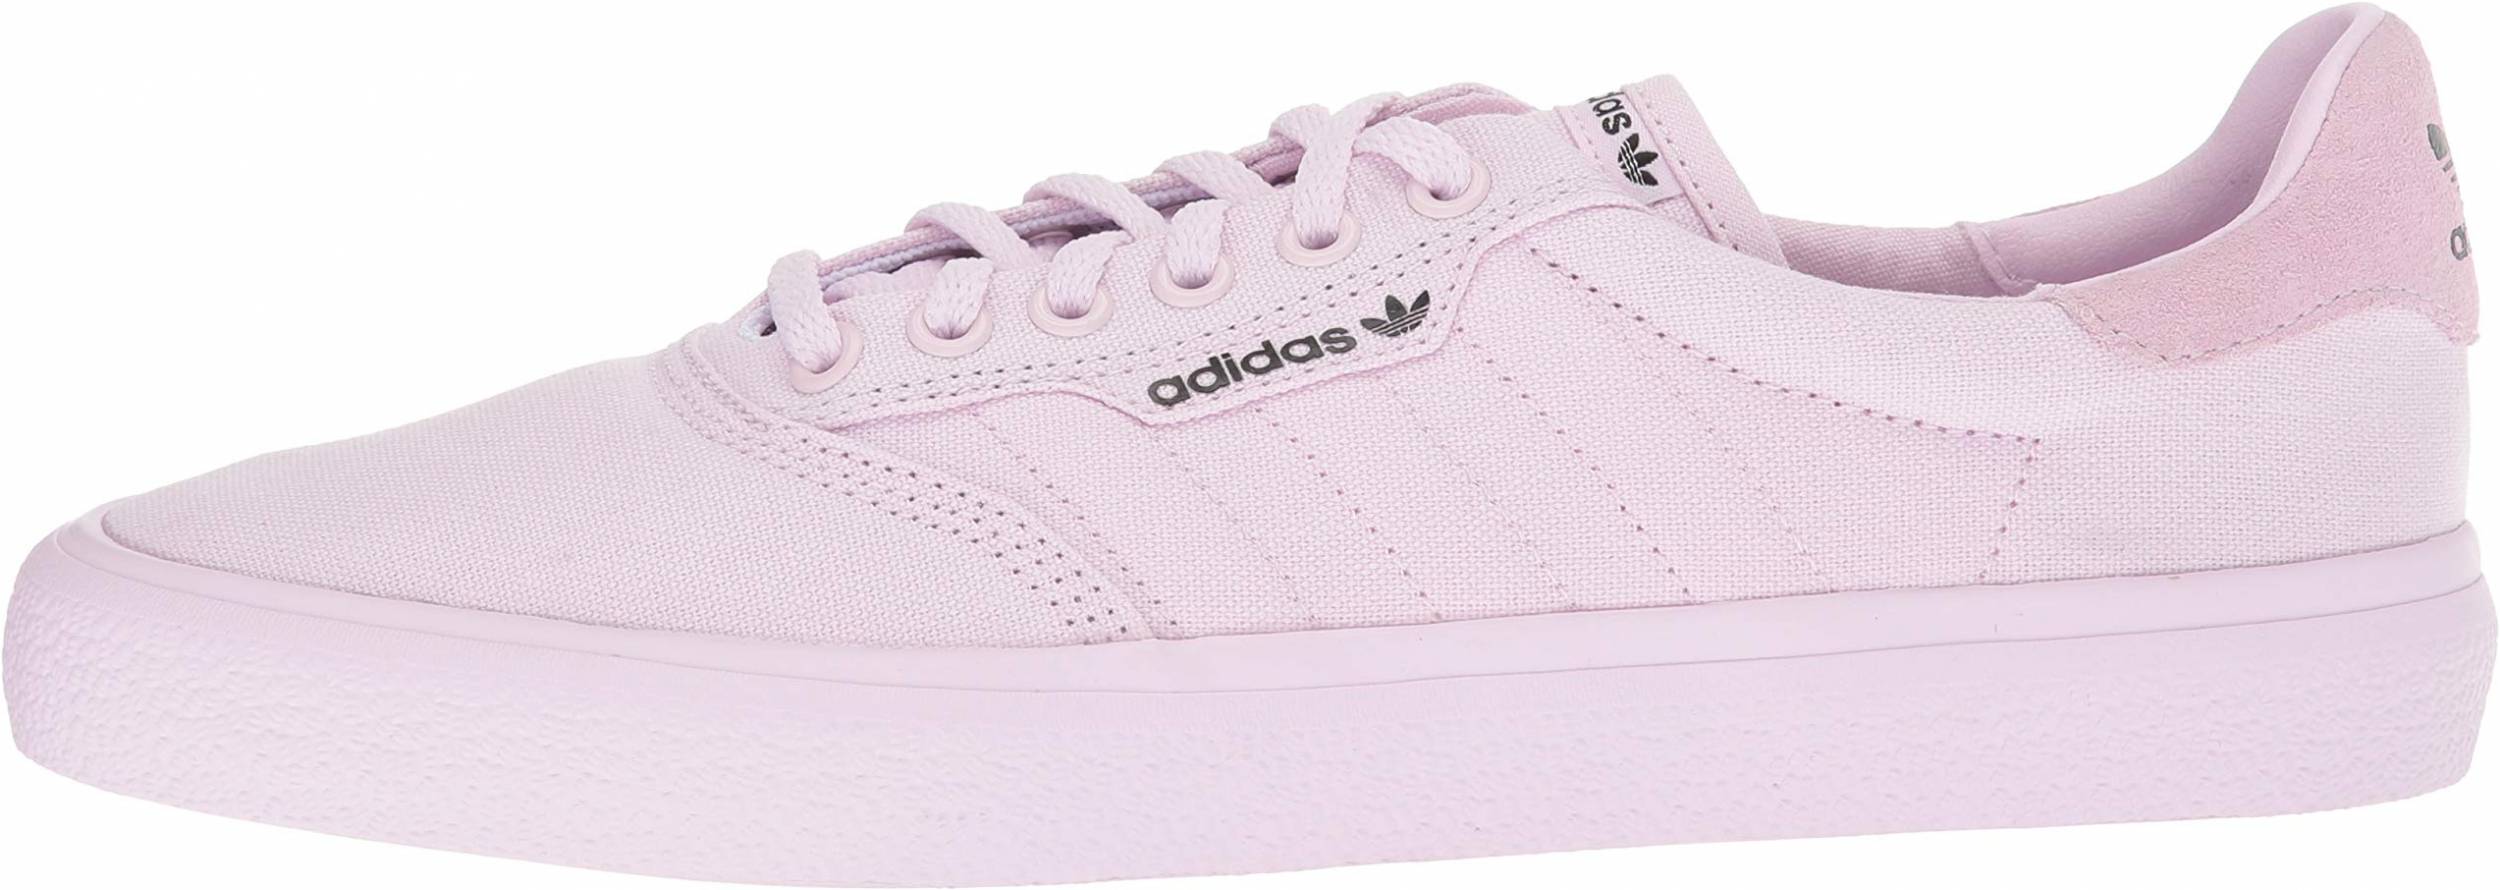 pink adidas originals trainers